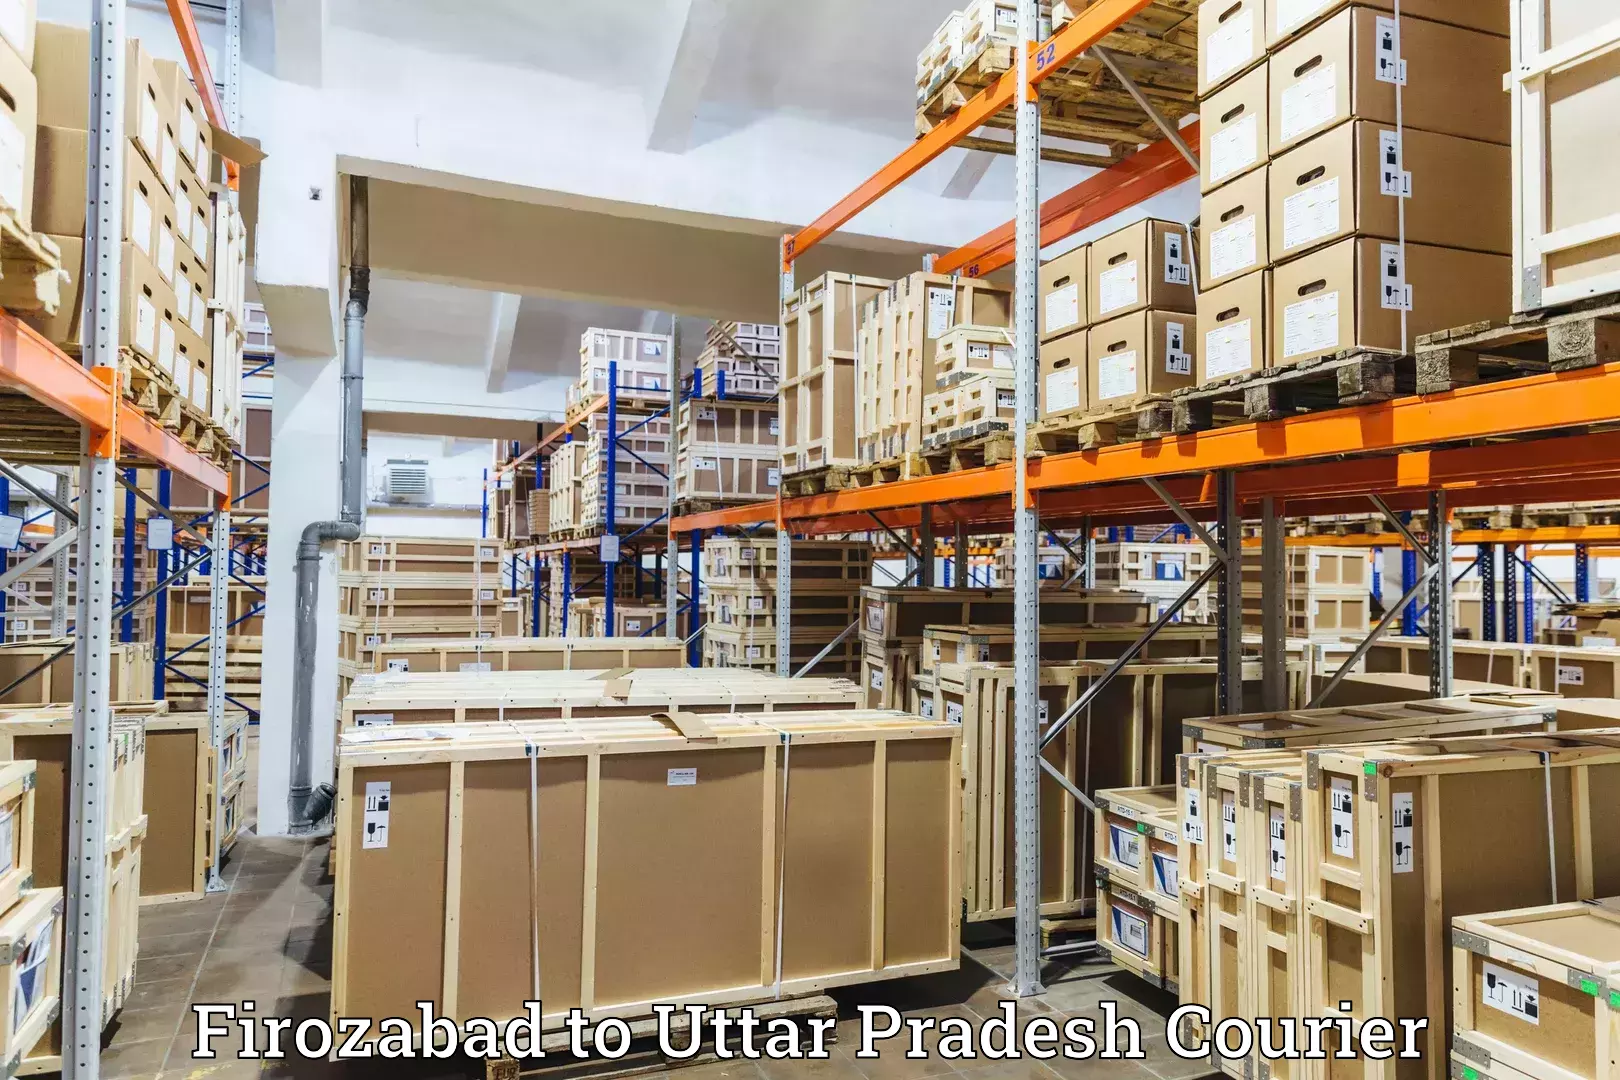 Courier service innovation Firozabad to Uttar Pradesh